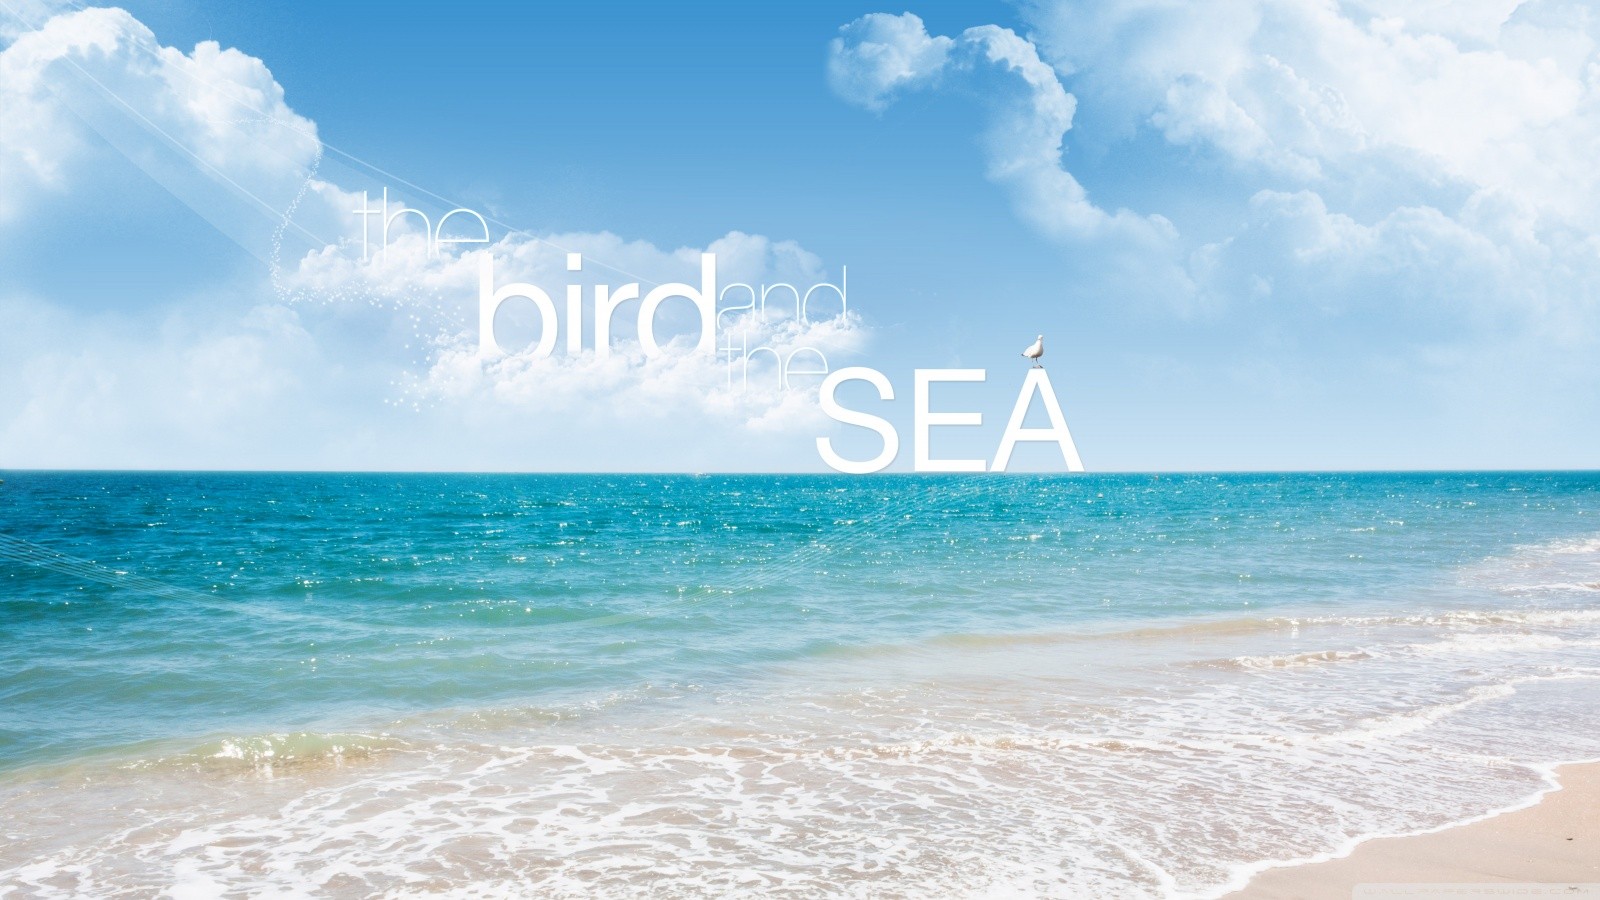 General 1600x900 quote beach typography sea sky digital art horizon outdoors birds animals clouds